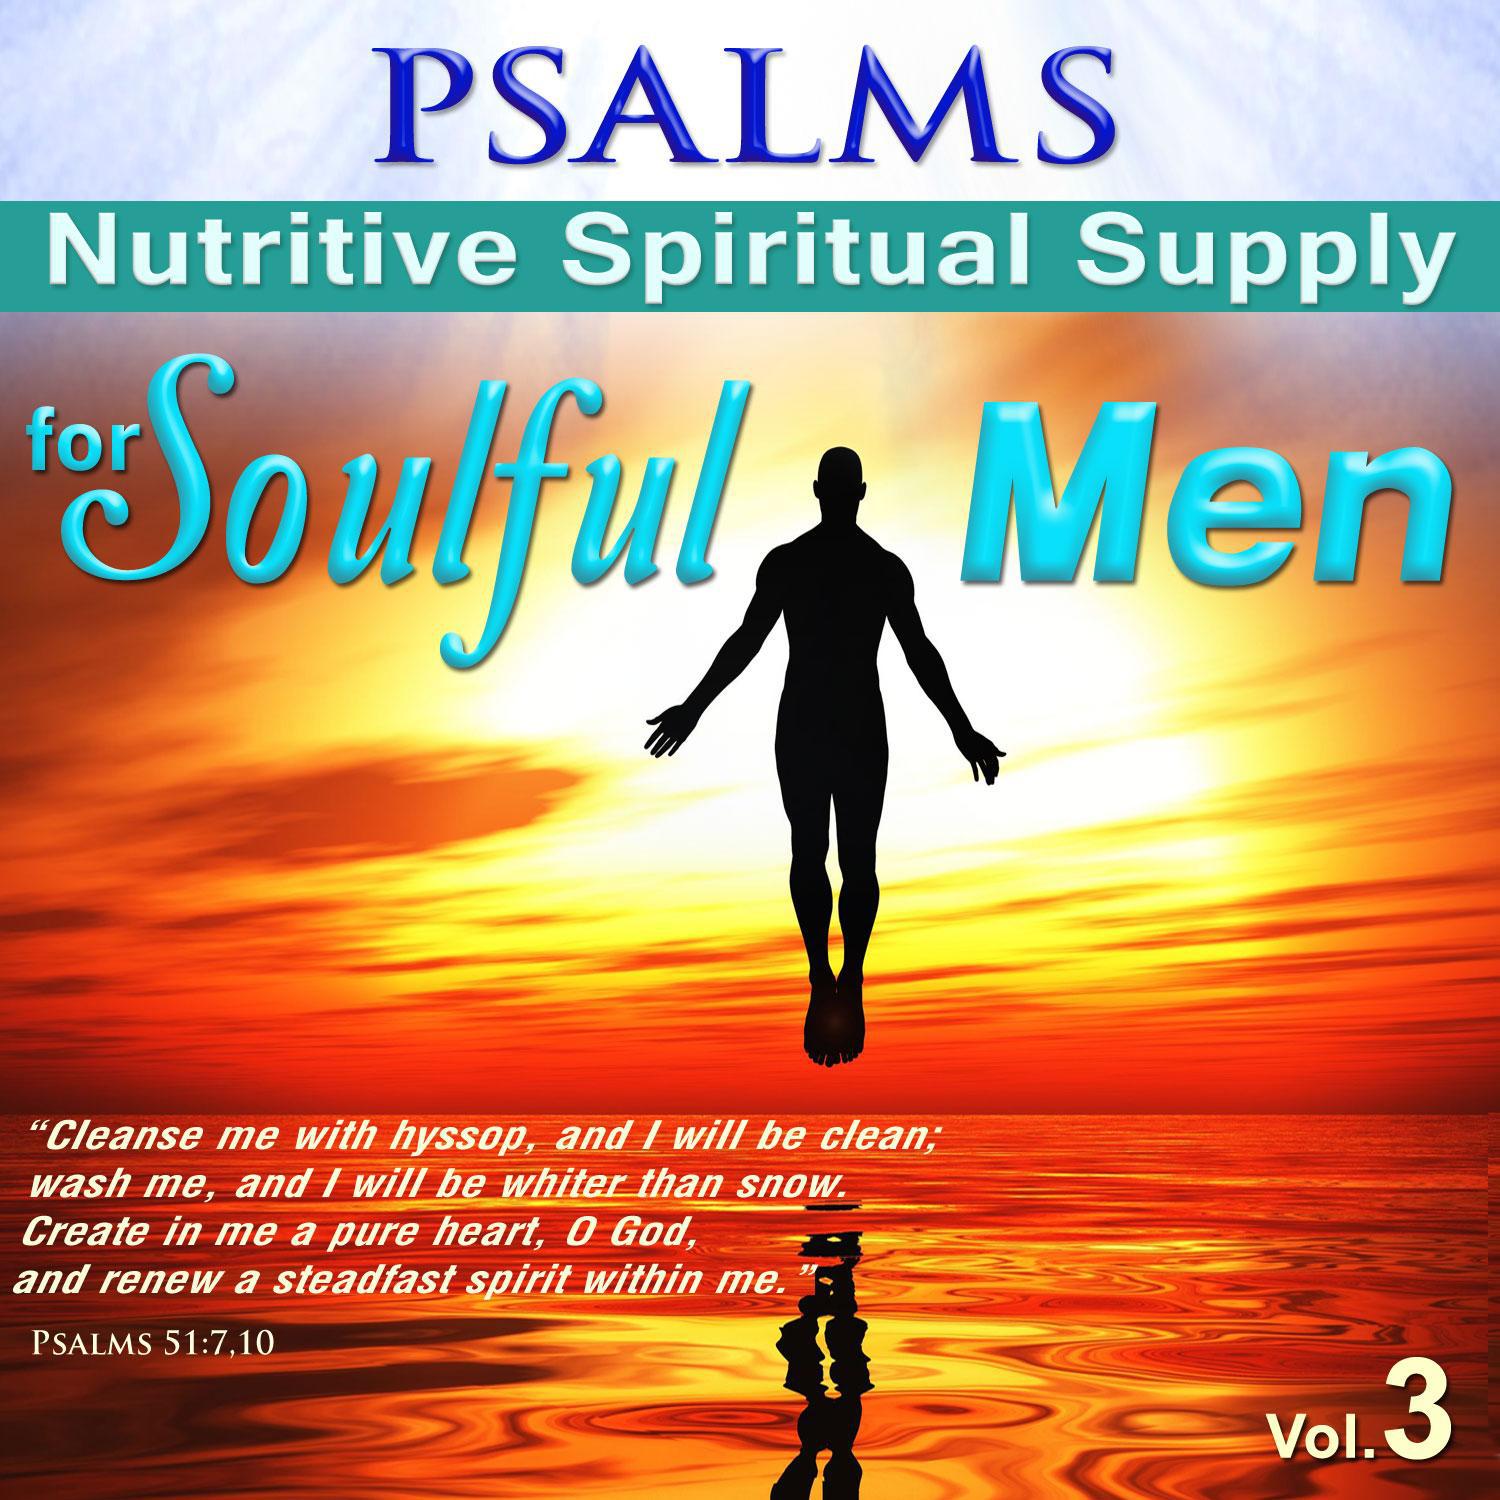 Psalms, Nutritive Spiritual Supply for Soulful Men, Vol. 3